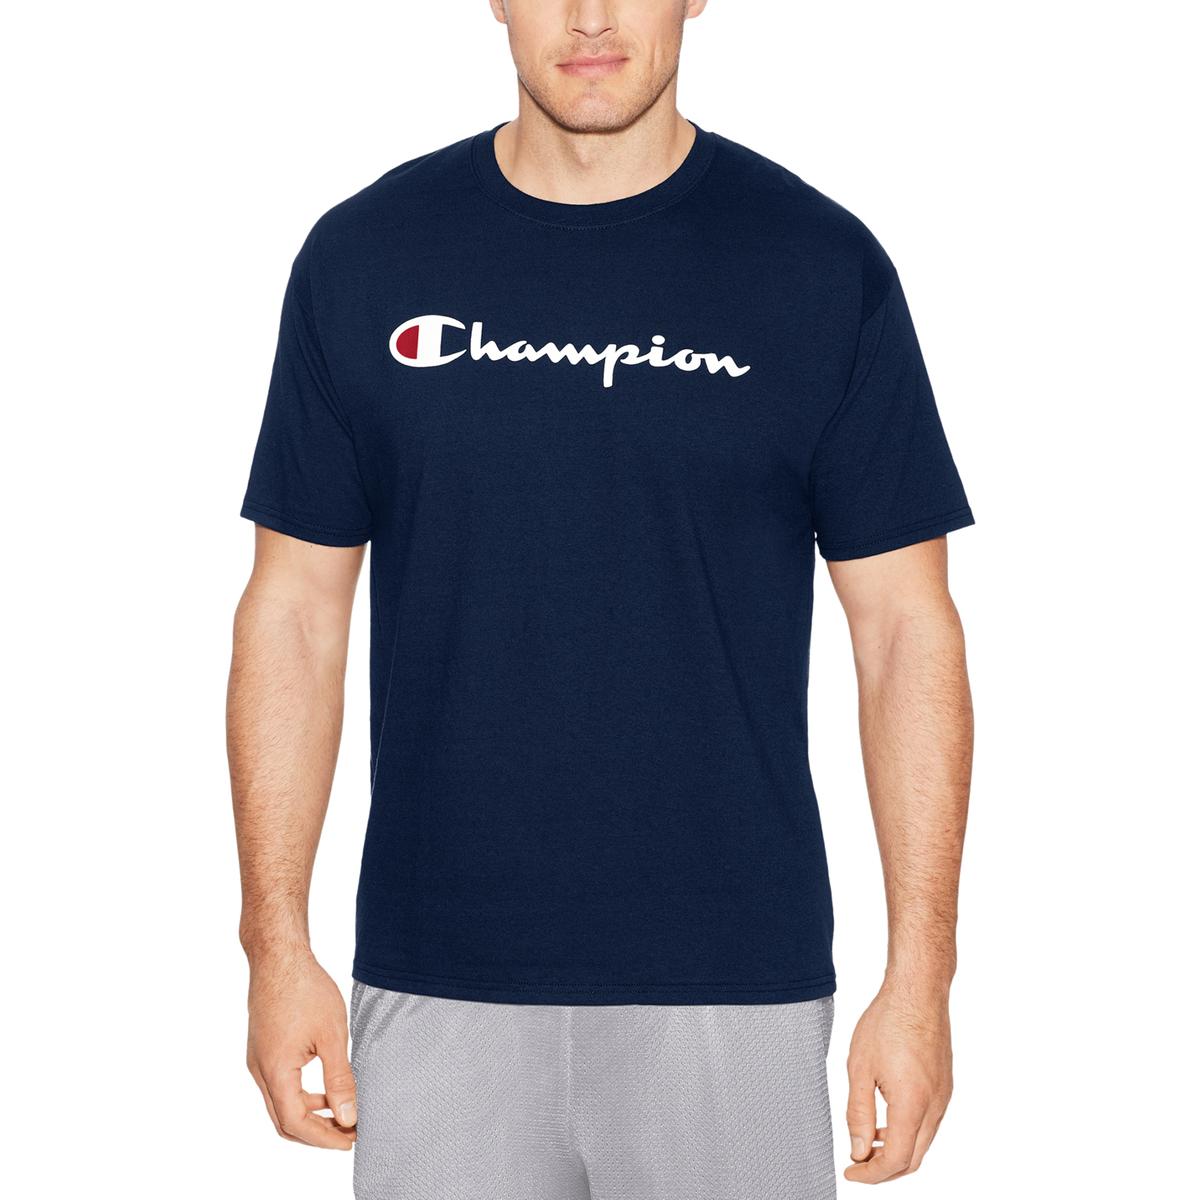 Champion Mens Navy Fitness Workout Active Wear T-Shirt S BHFO 5188 | eBay